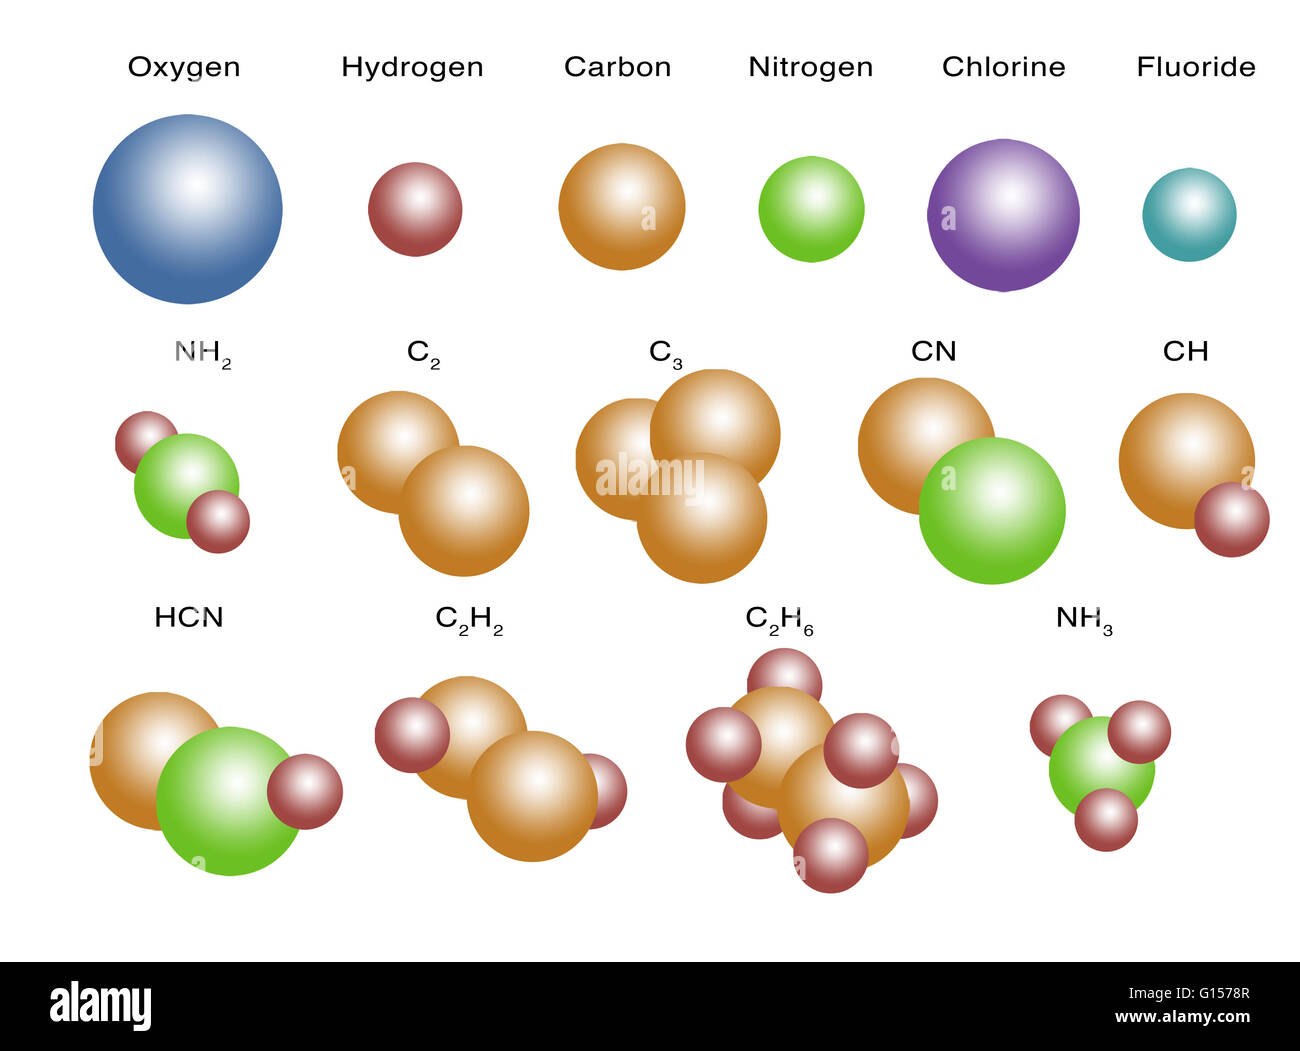 Азот углерод кислород в воде. Молекула воздуха. Размер вируса и молекулы. Сравнение размеров молекул. Карбон Оксиген нитроген.